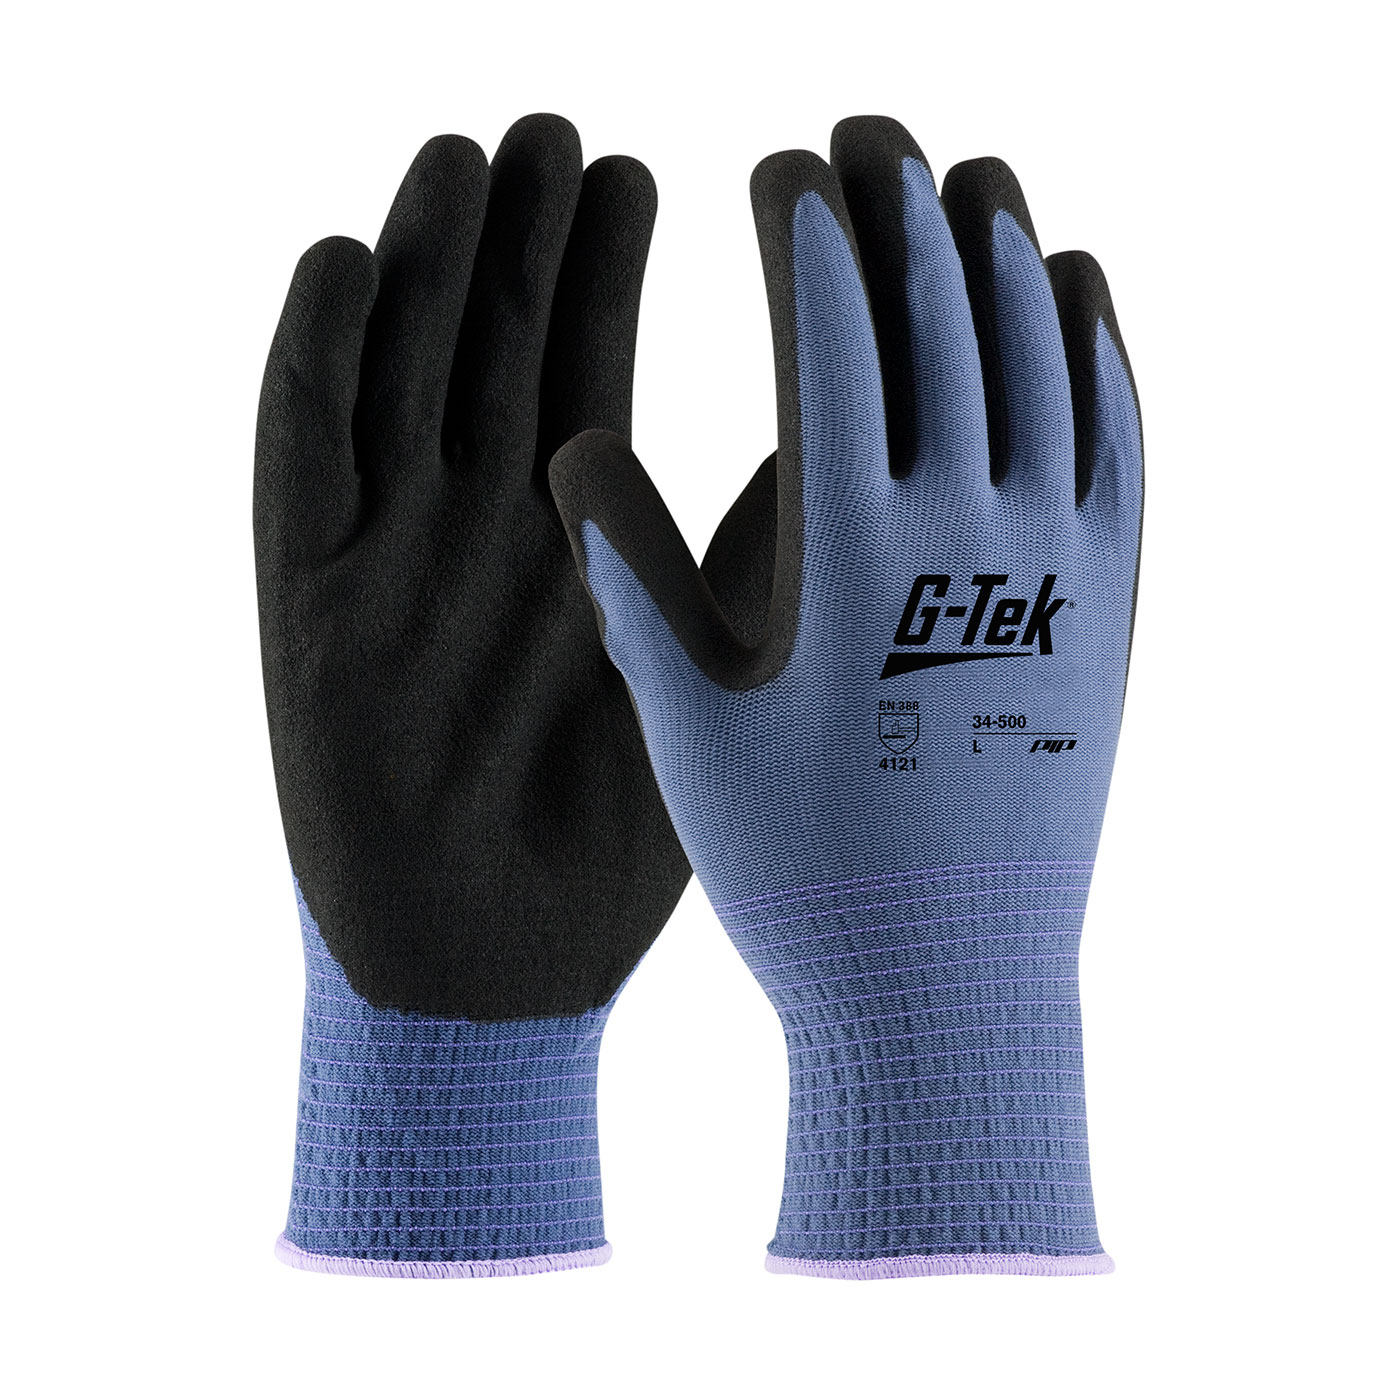 PIP 34-500/M G-Tek GP Seamless Knit Nylon Glove with Nitrile Coated MicroSurface Grip on Palm & Fingers - 13 Gauge - Medium PID-34 500 M